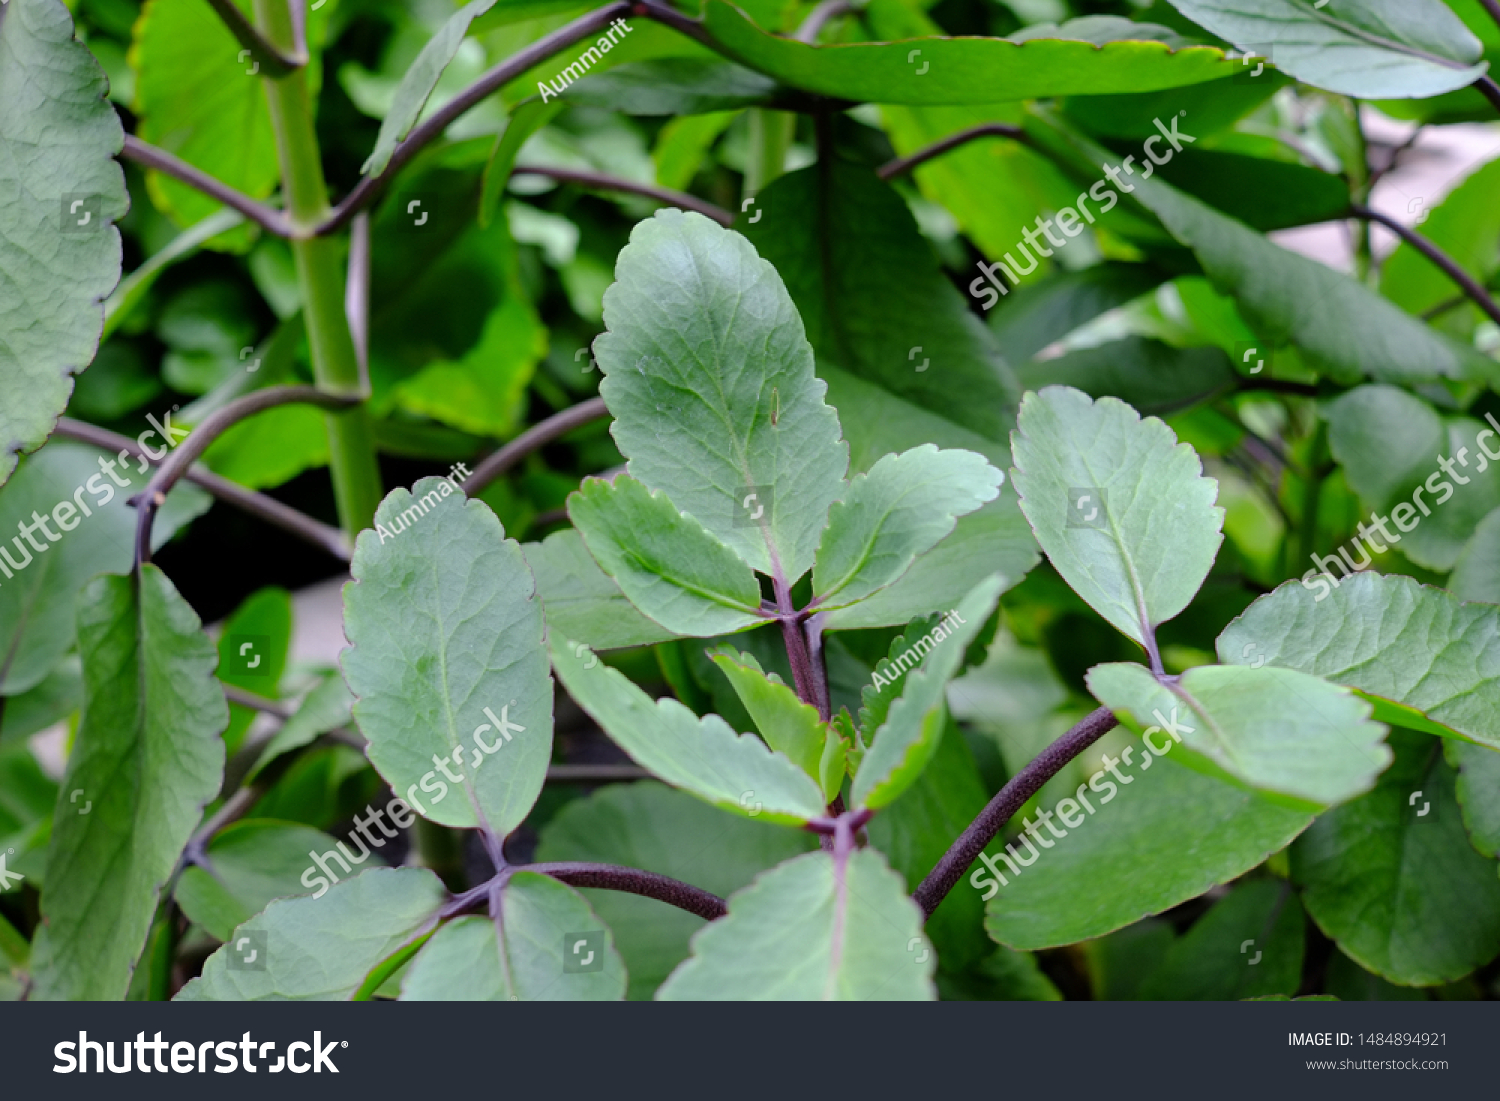 Bryophyllum pinnatum is widely used in ayurvedic system of medicine as astringent, analgesic, carminative #1484894921